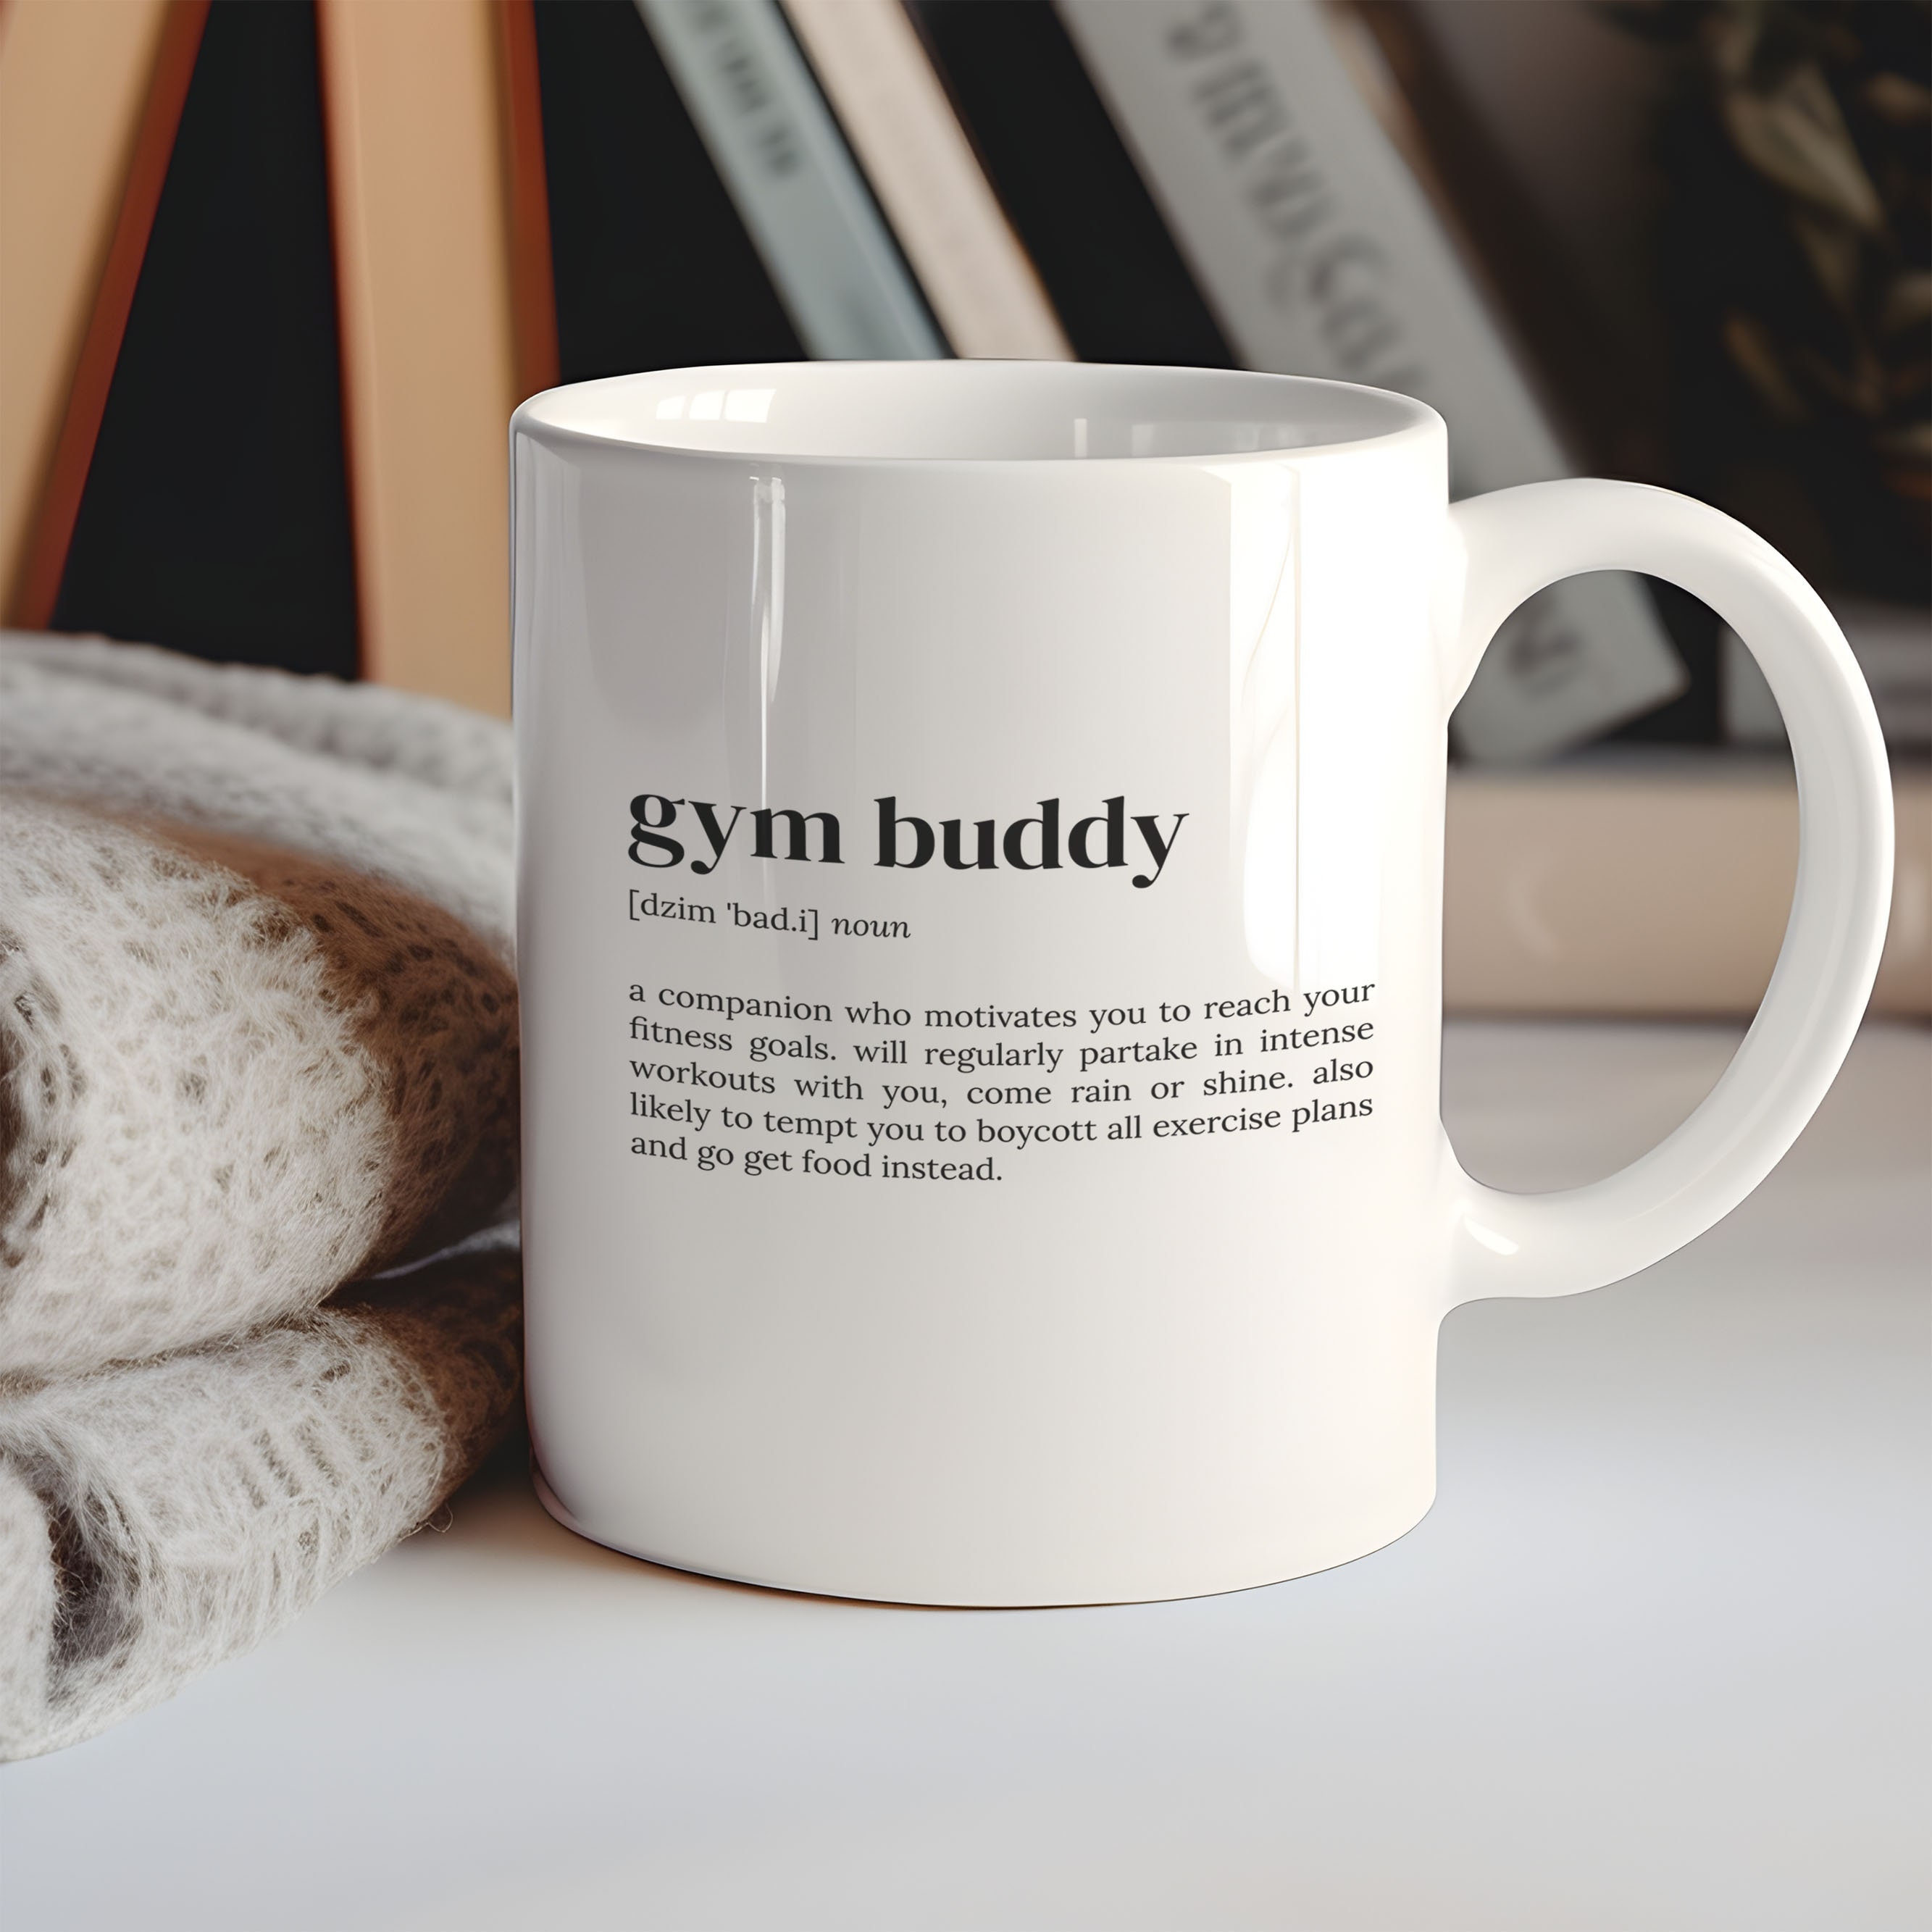 Personalized Workout Mug Just a Girls With Goals Personalized GYM Mug Gym  Lover Girl Coffee Mug Fitness Girl Mug Custom Gift Fitness Lovers 